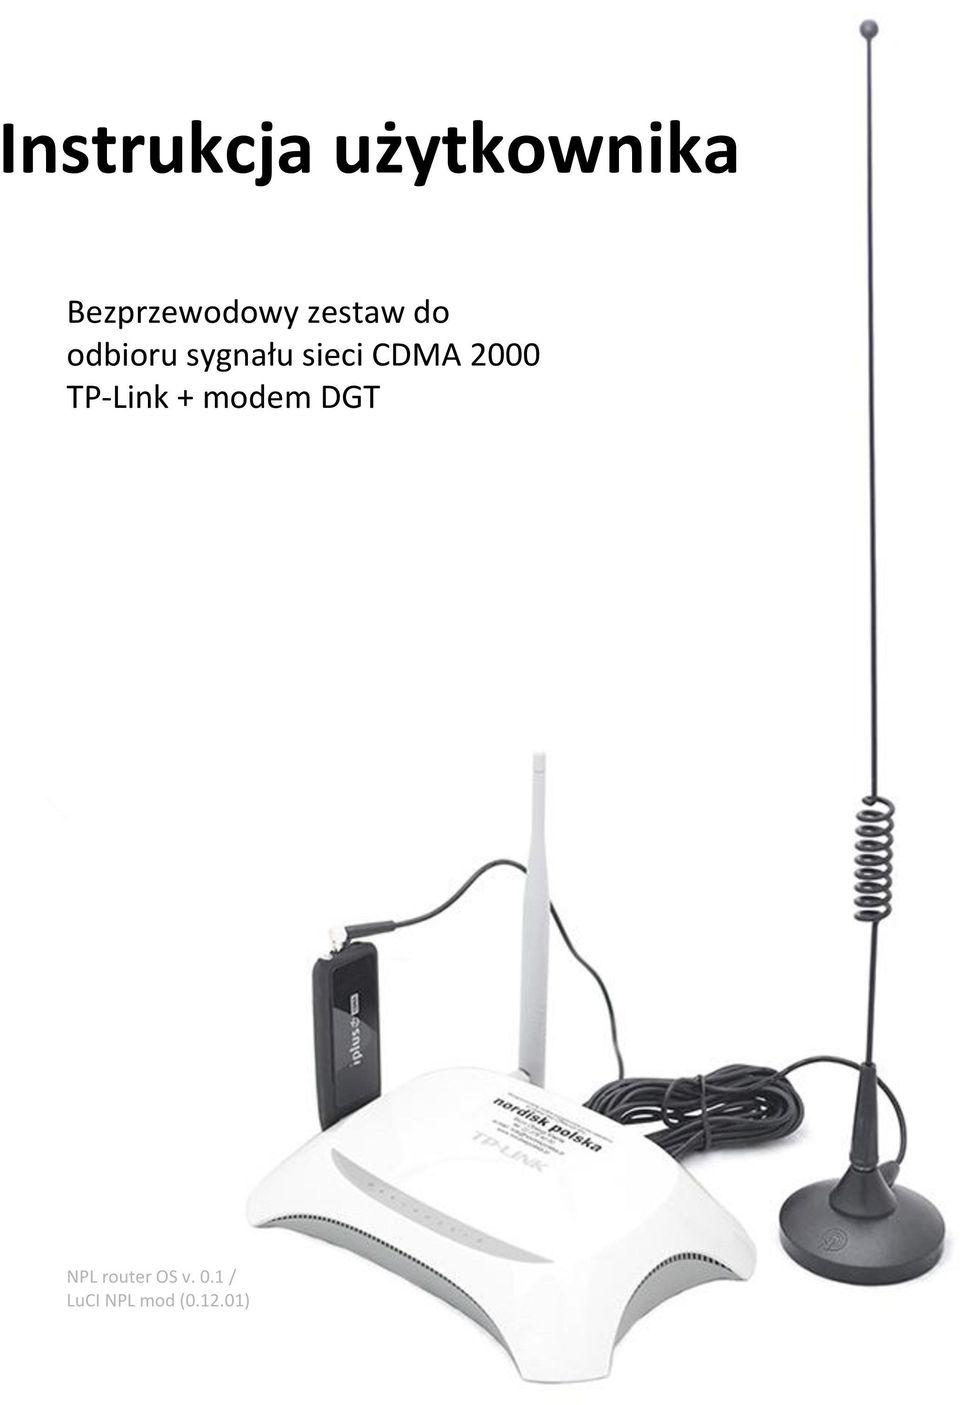 sygnału sieci CDMA 2000 TP-Link +